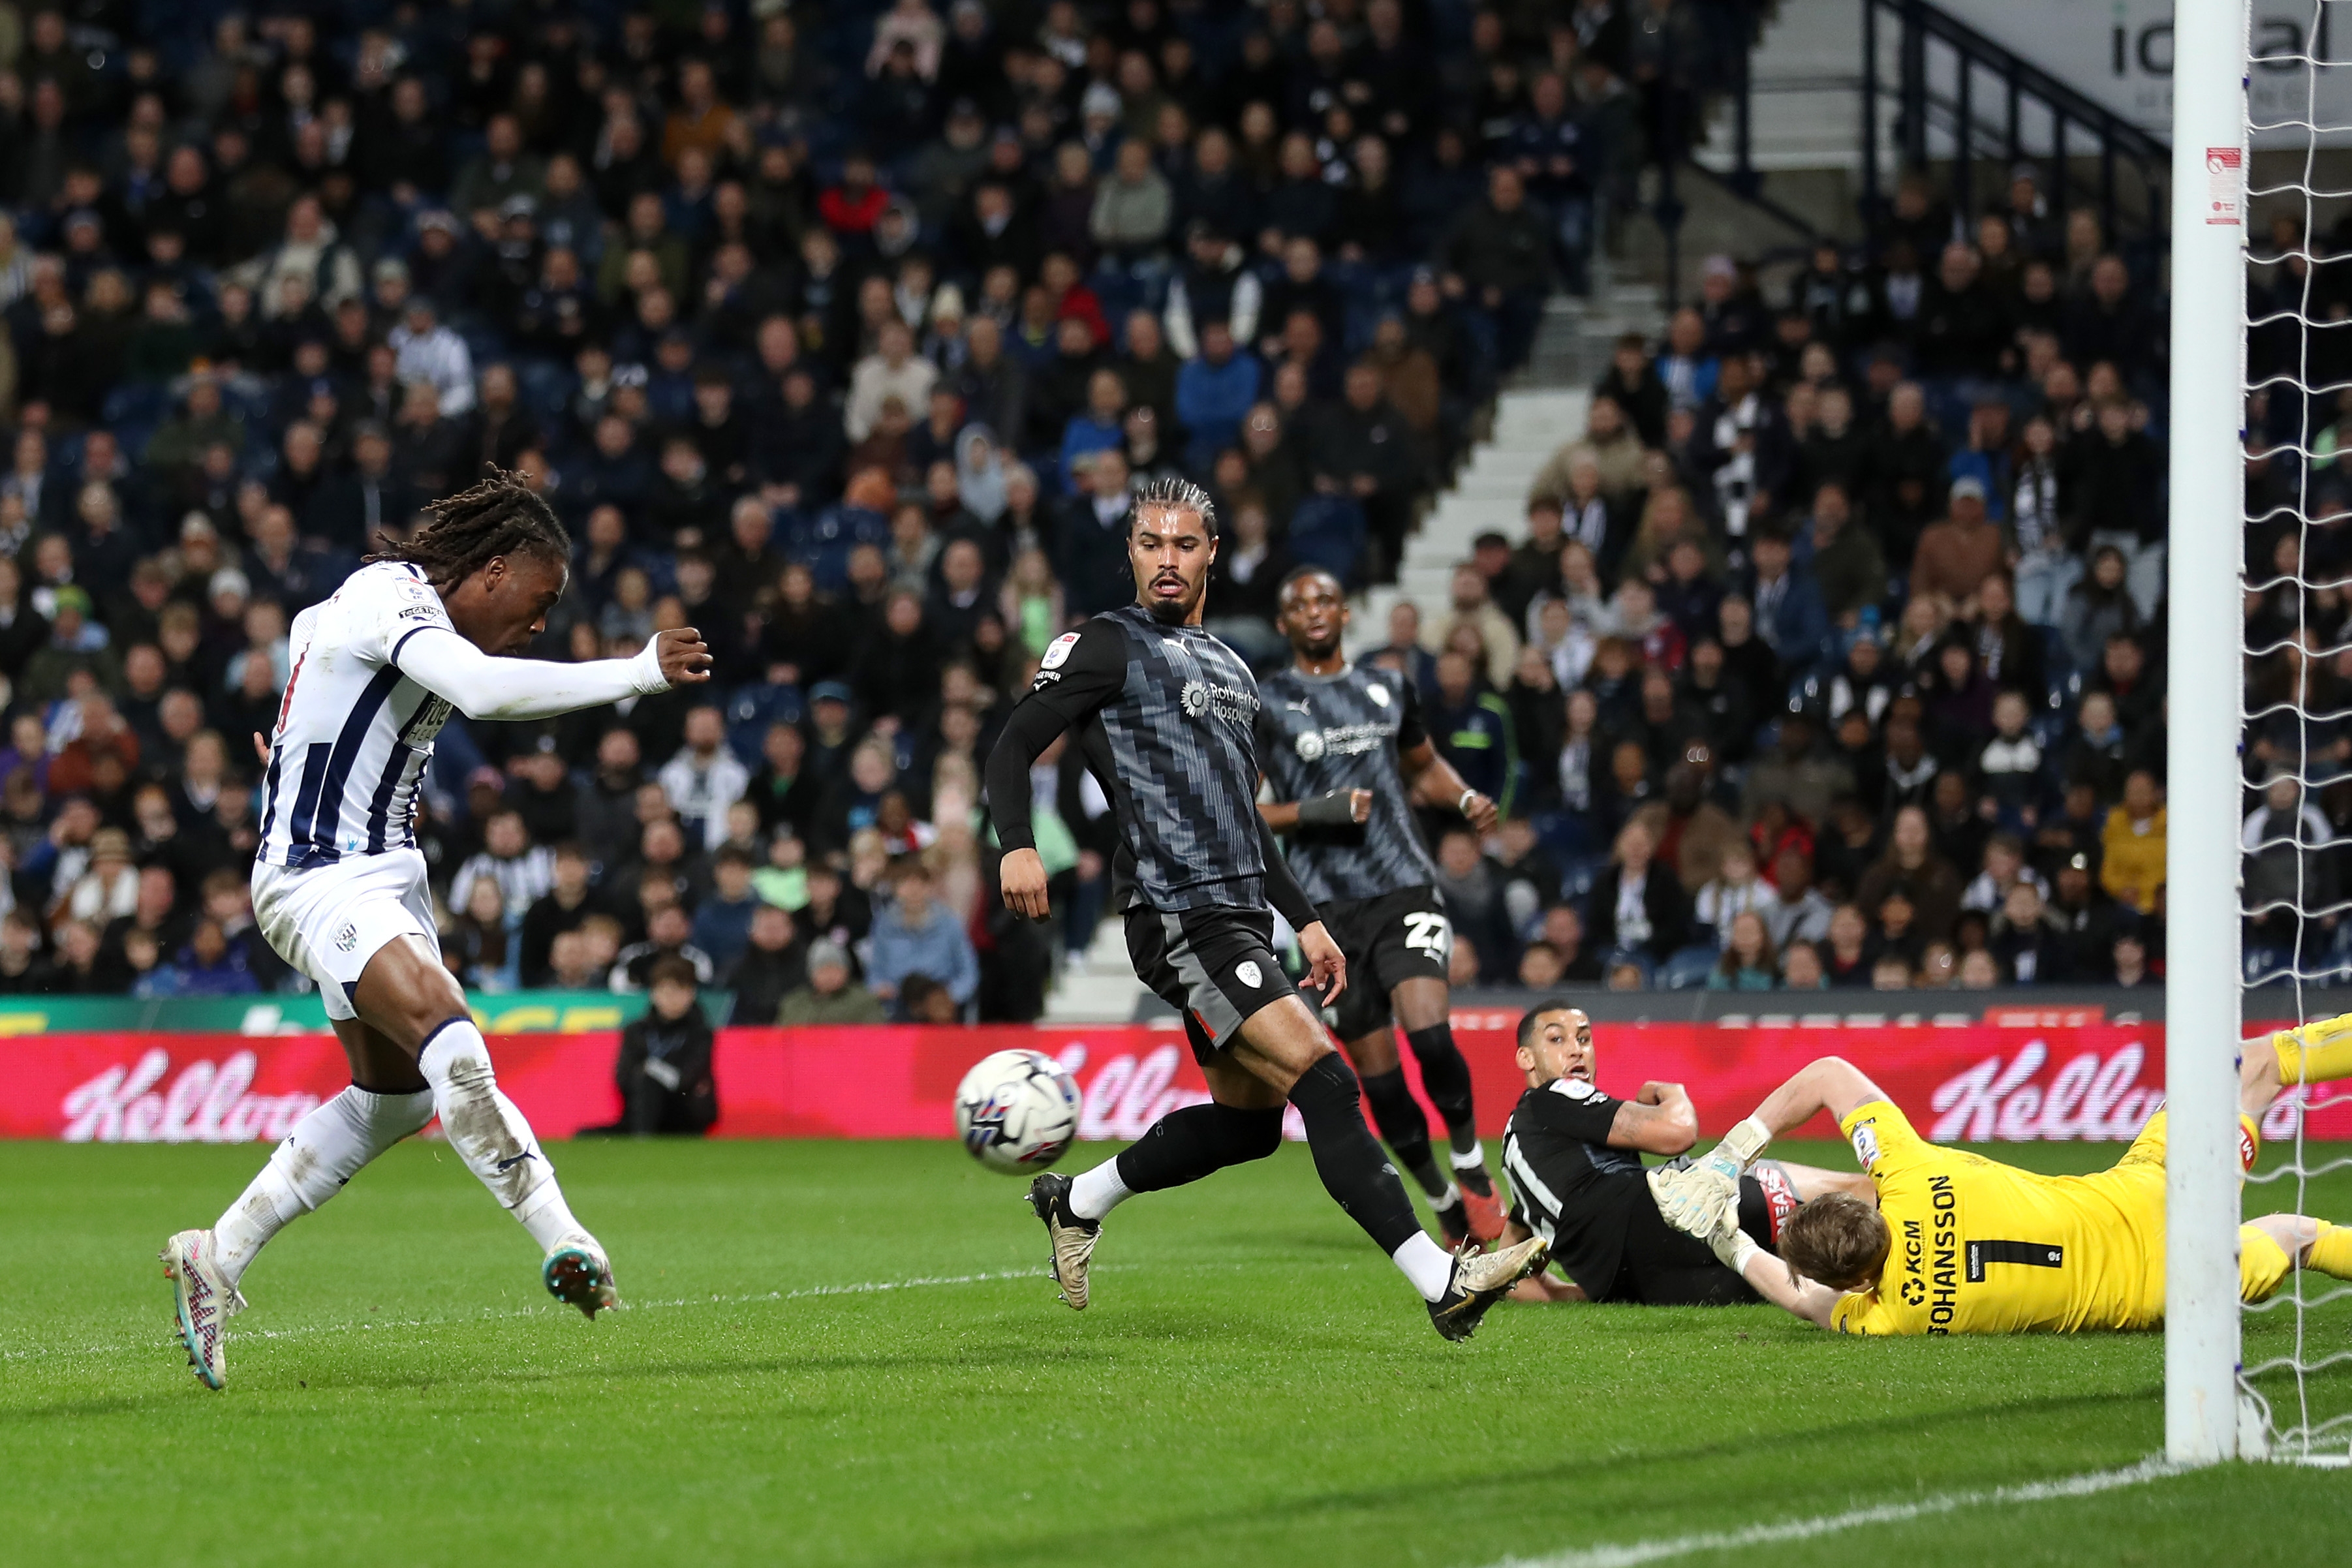 Brandon Thomas-Asante shoots at goal against Rotherham United 